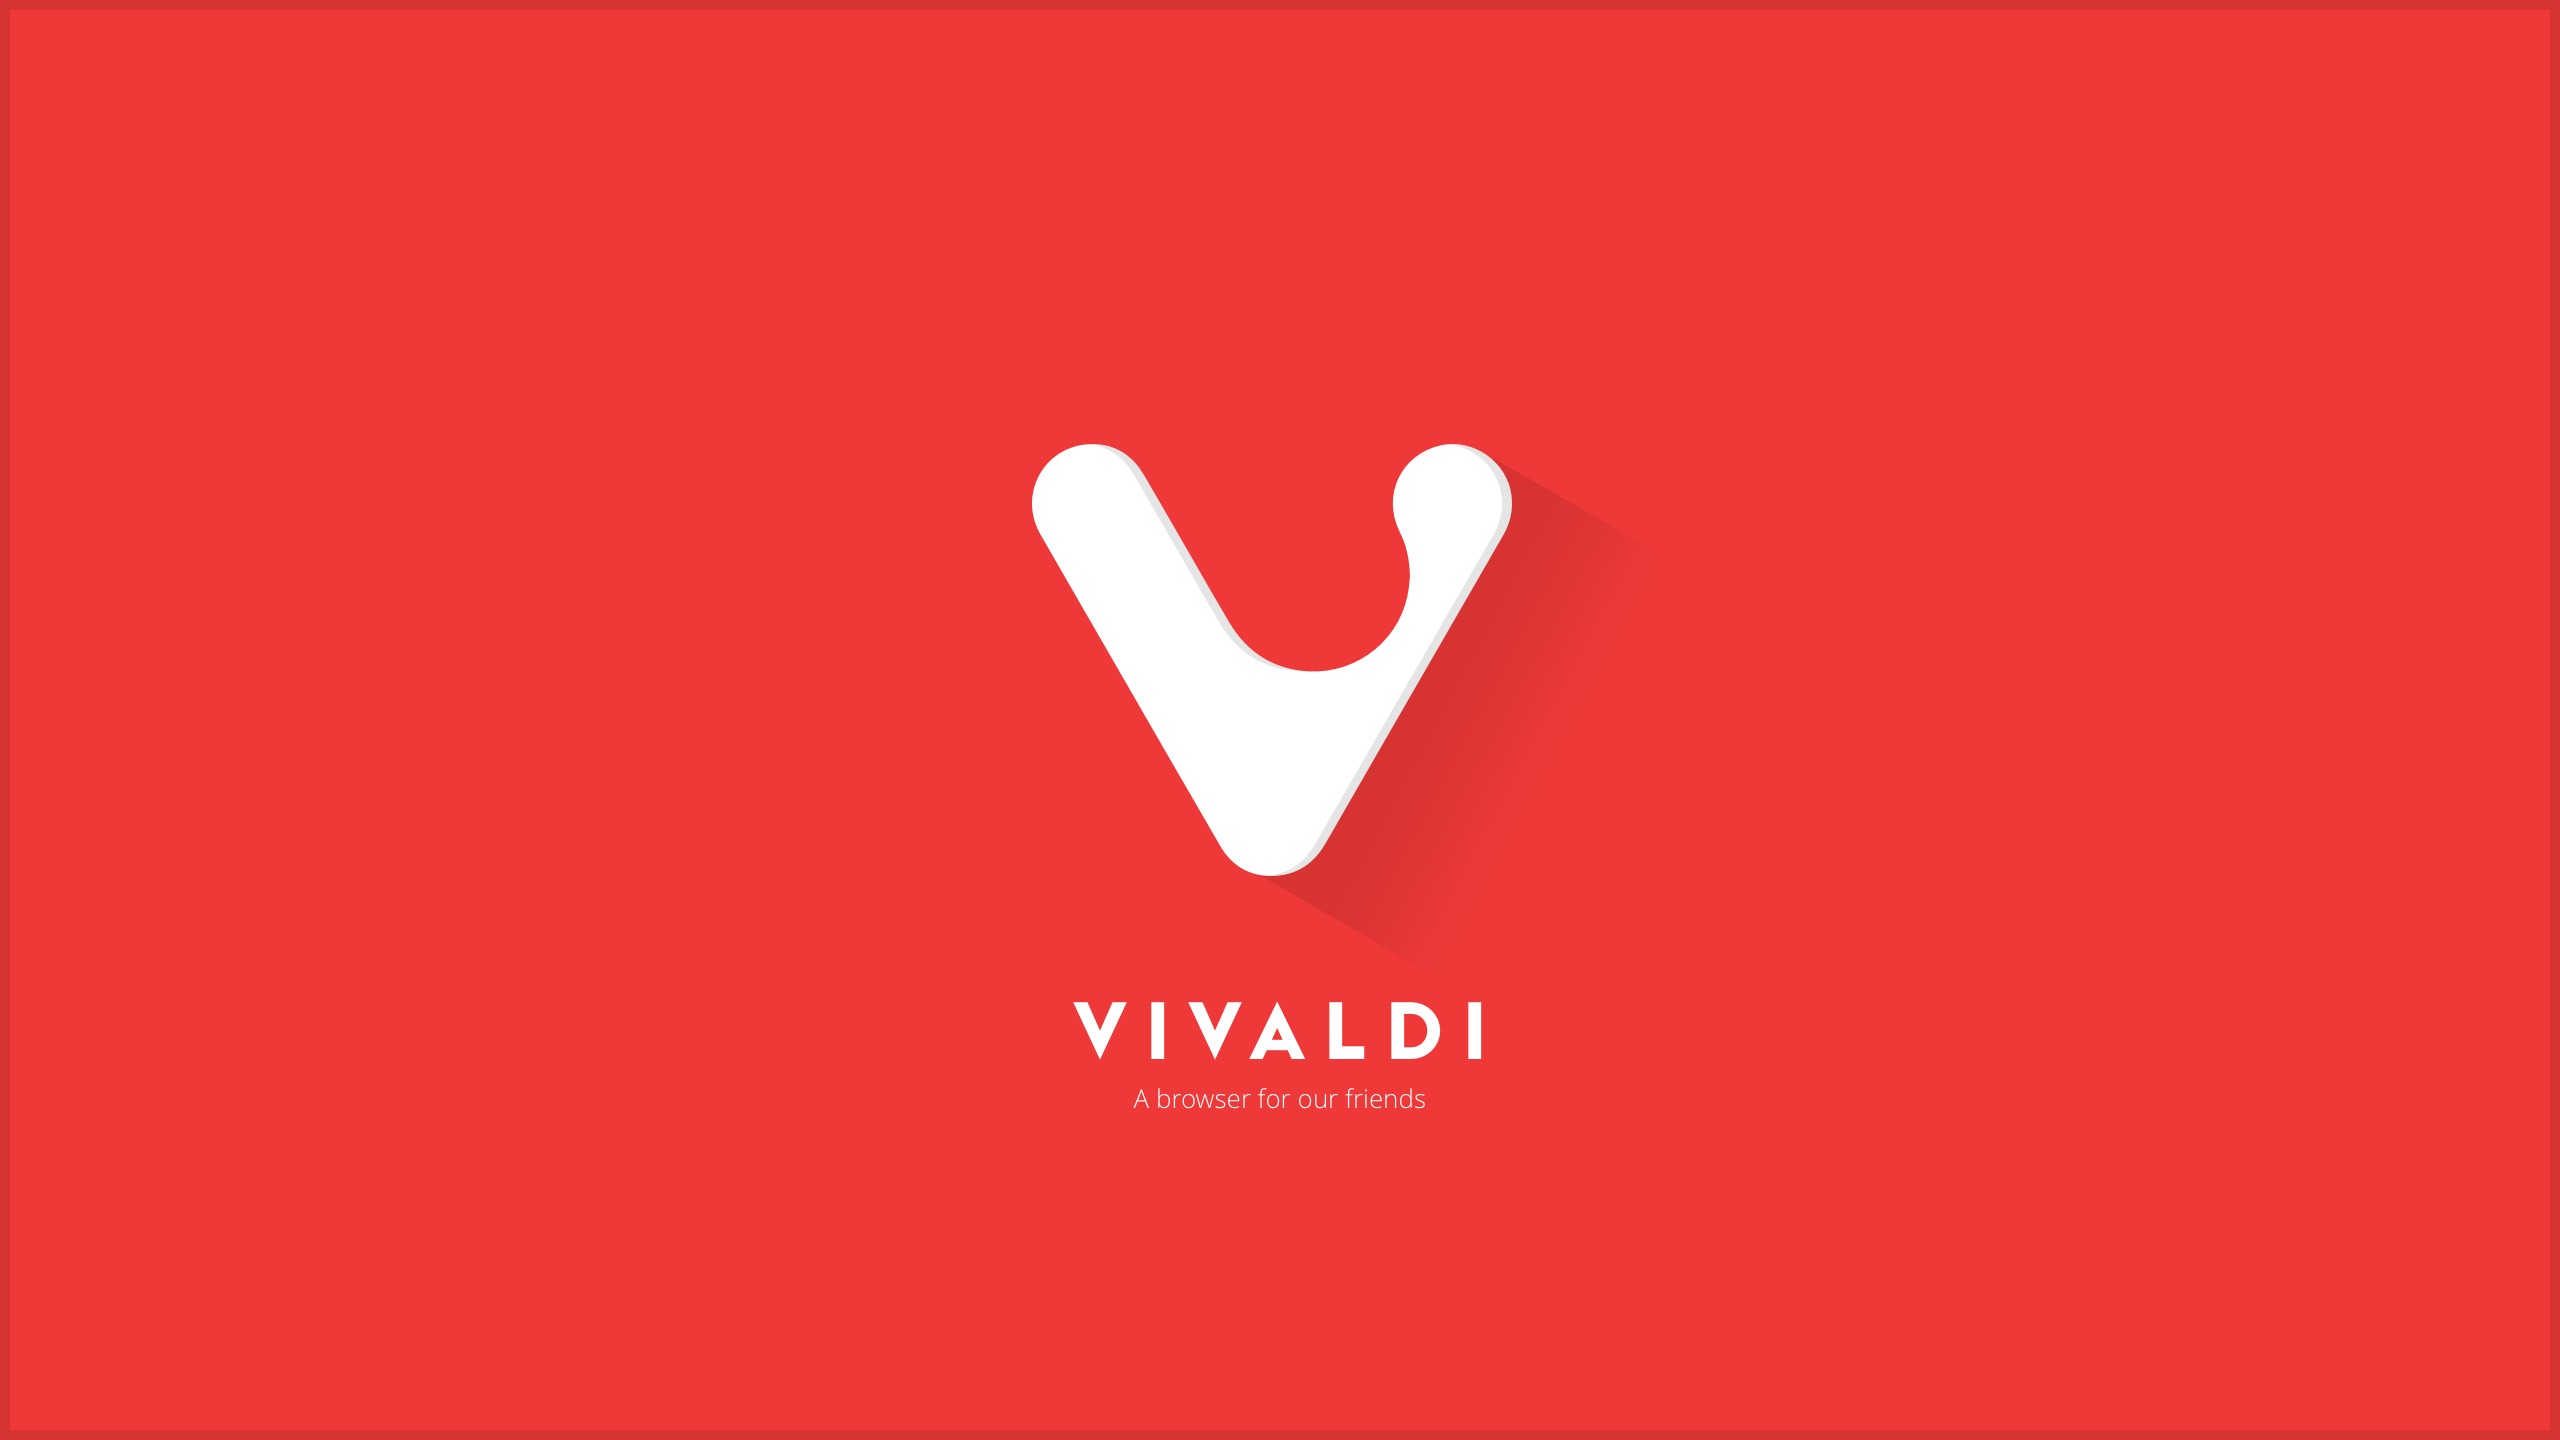 Vivaldi launches an in-browser game - Vivaldia